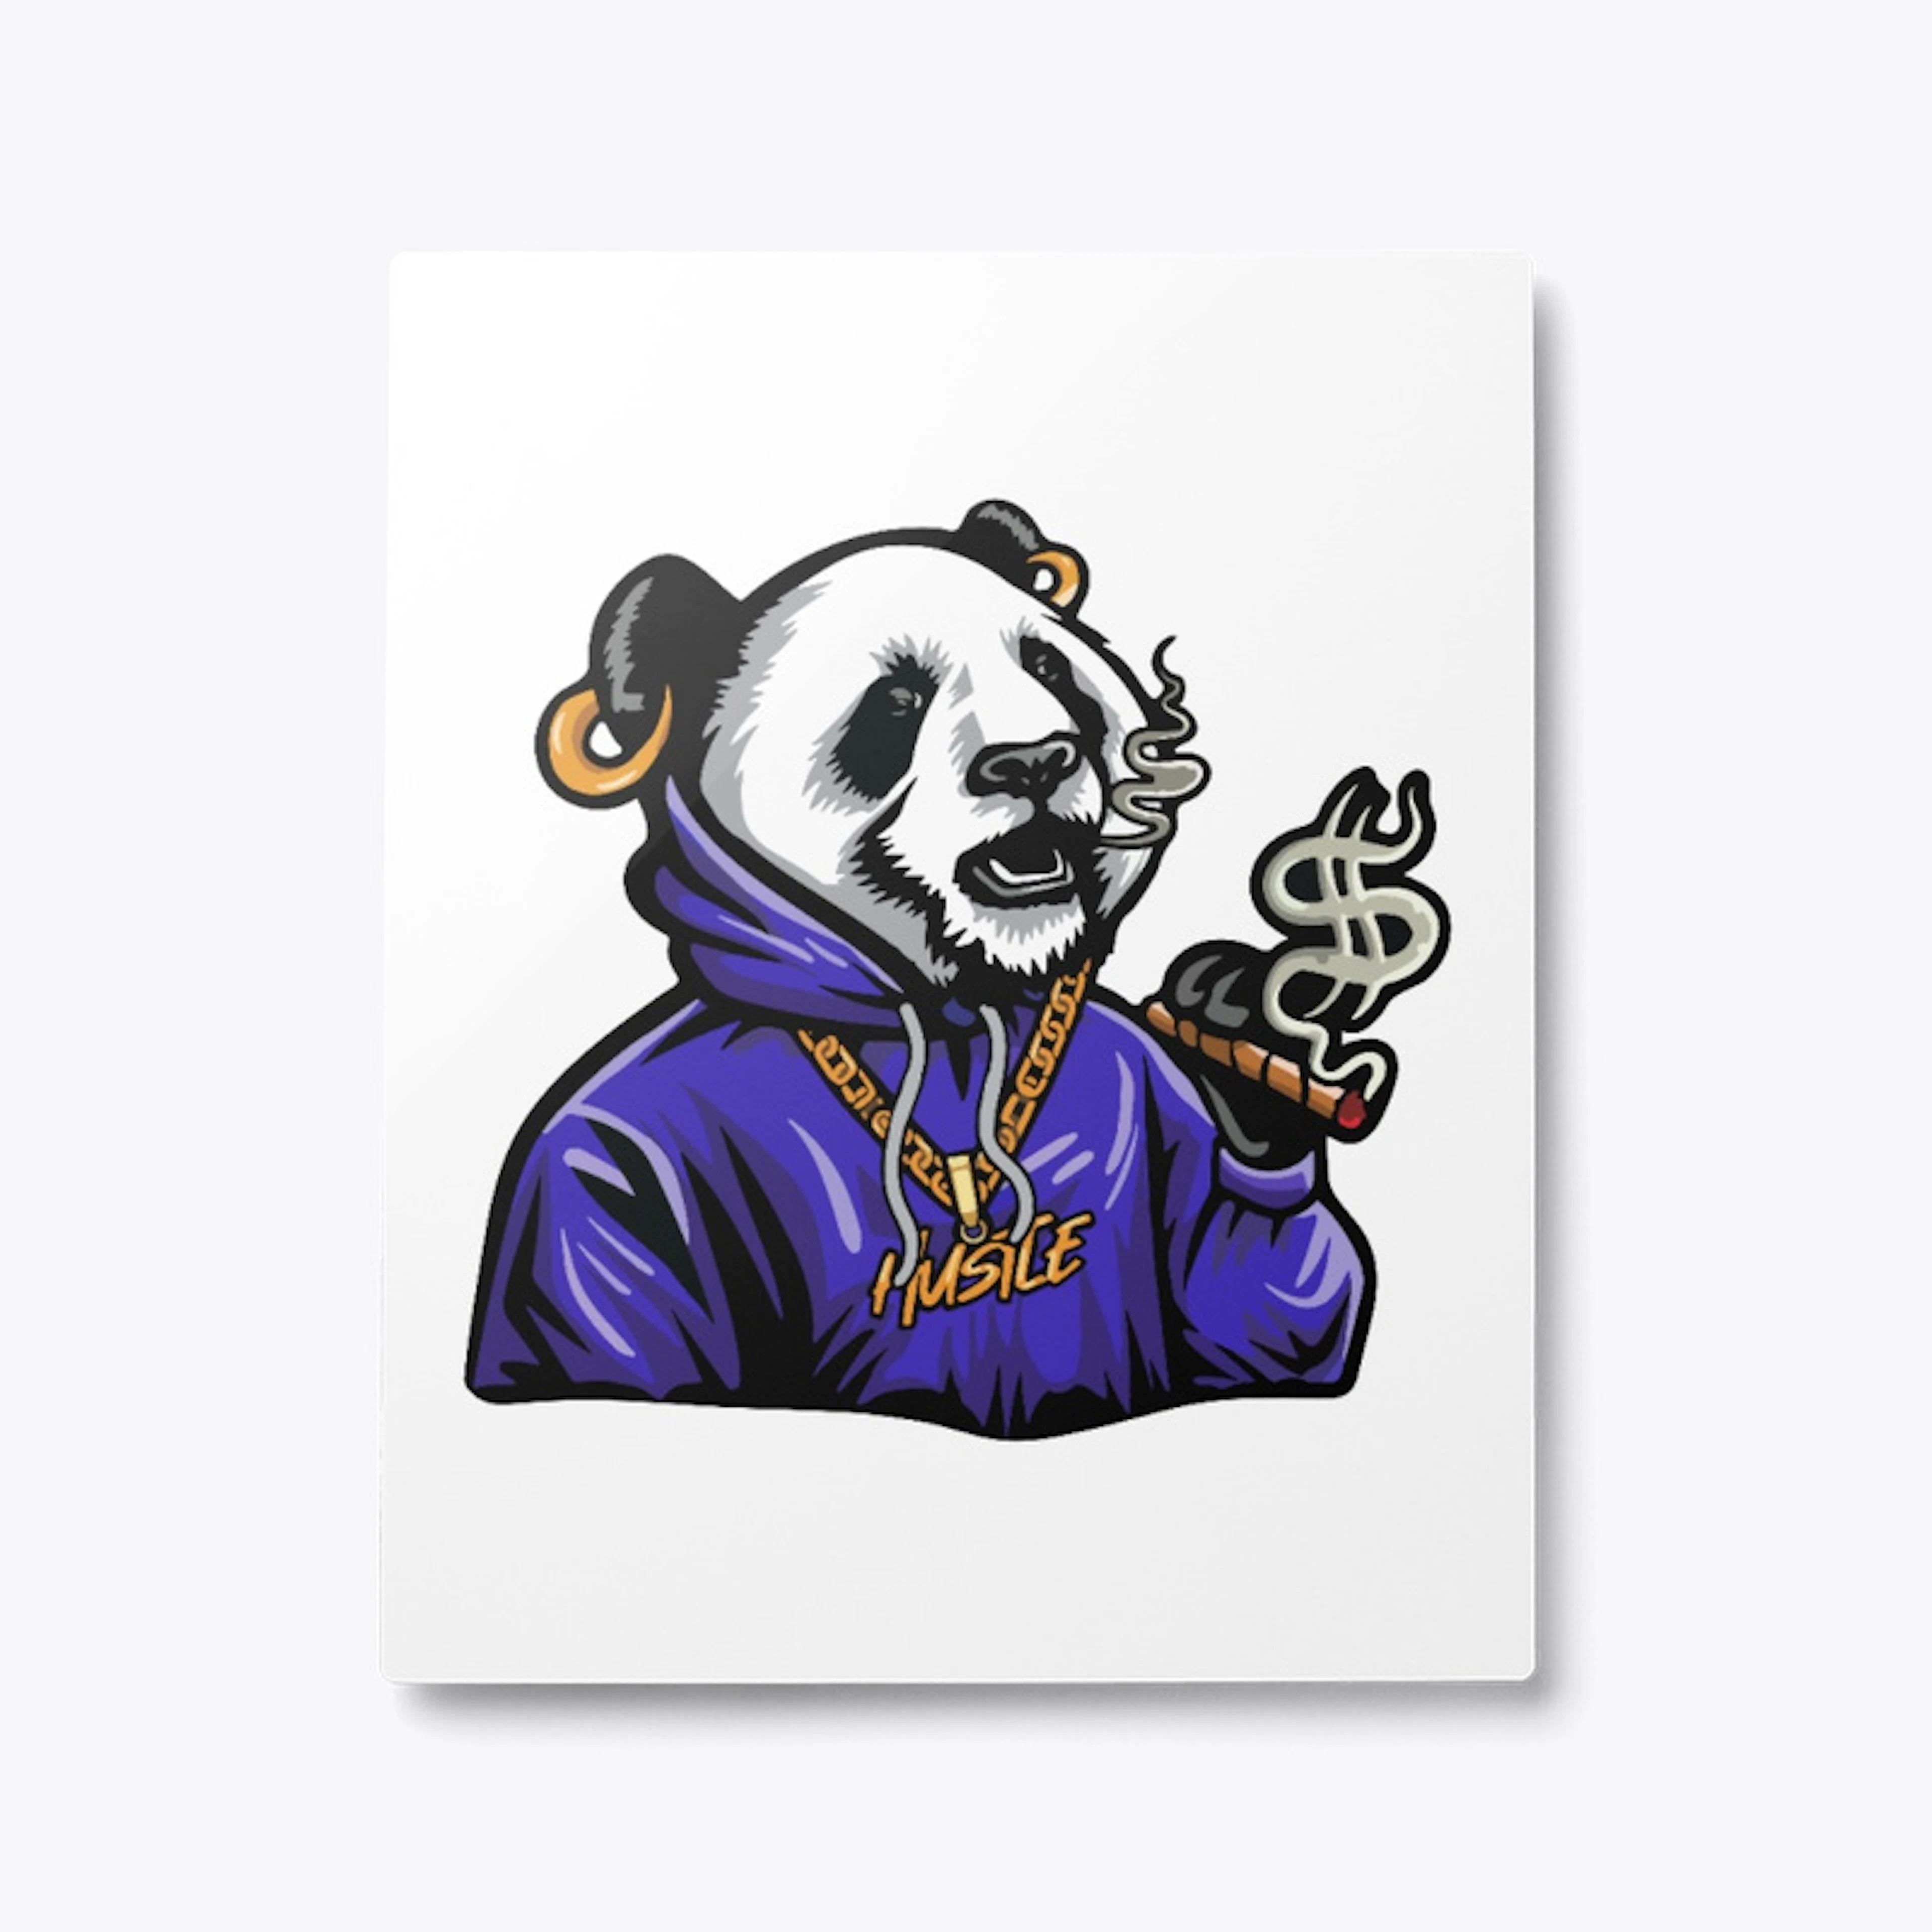 Hustle Panda Smokes Cash! 